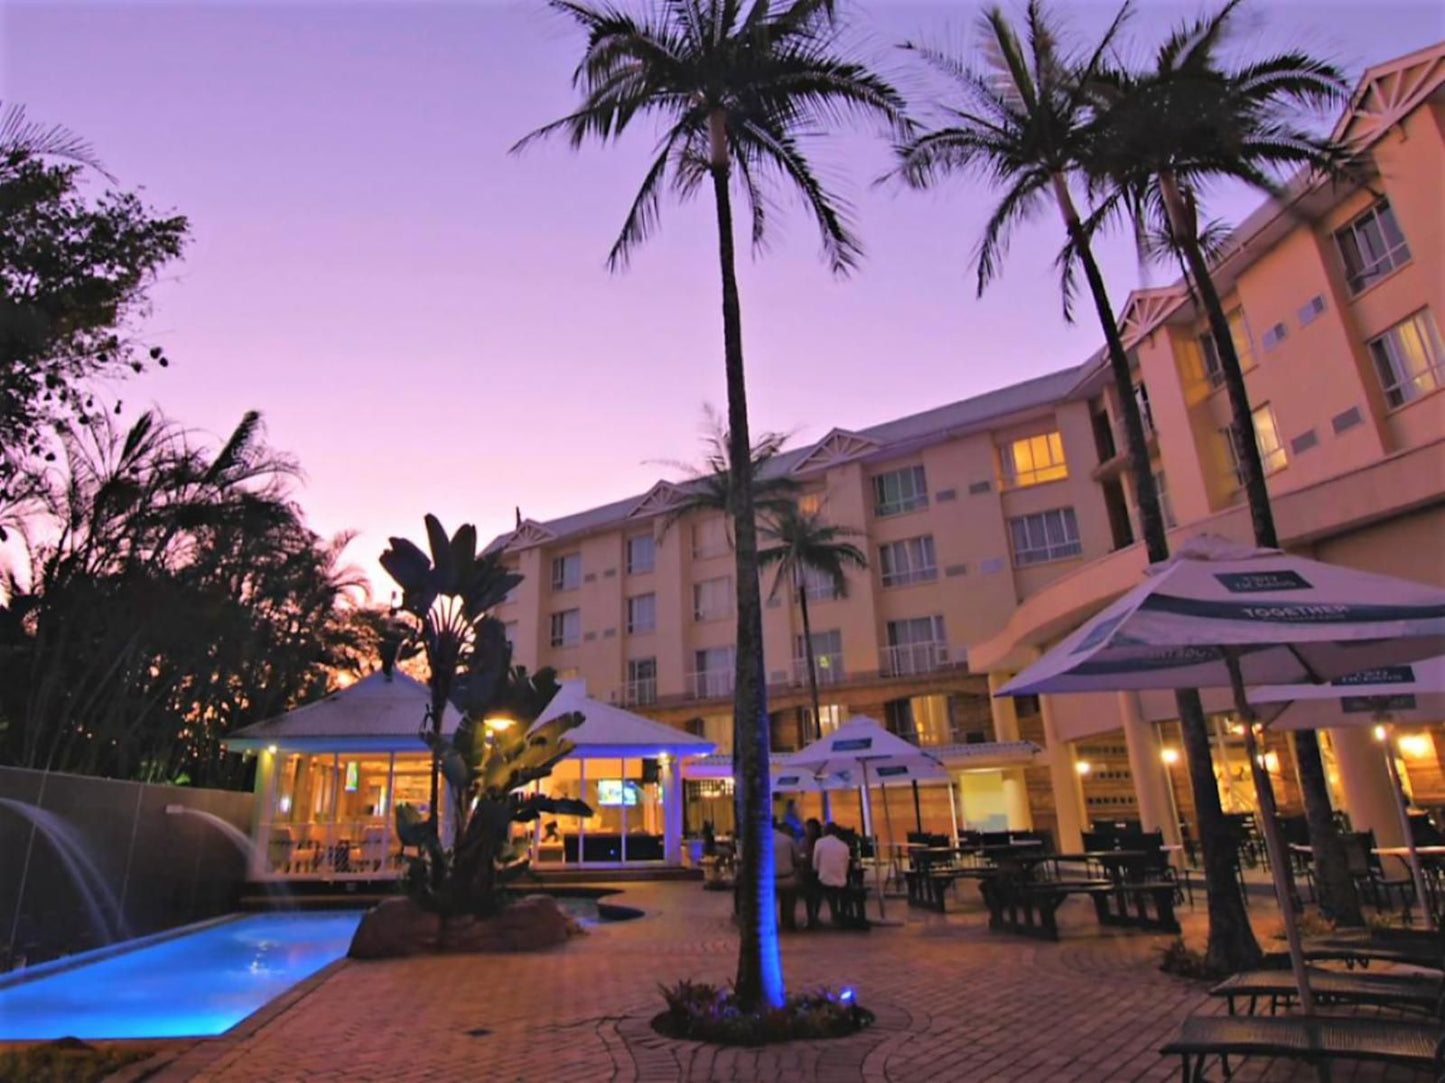 Riverside Hotel Prospect Hall Durban Kwazulu Natal South Africa Palm Tree, Plant, Nature, Wood